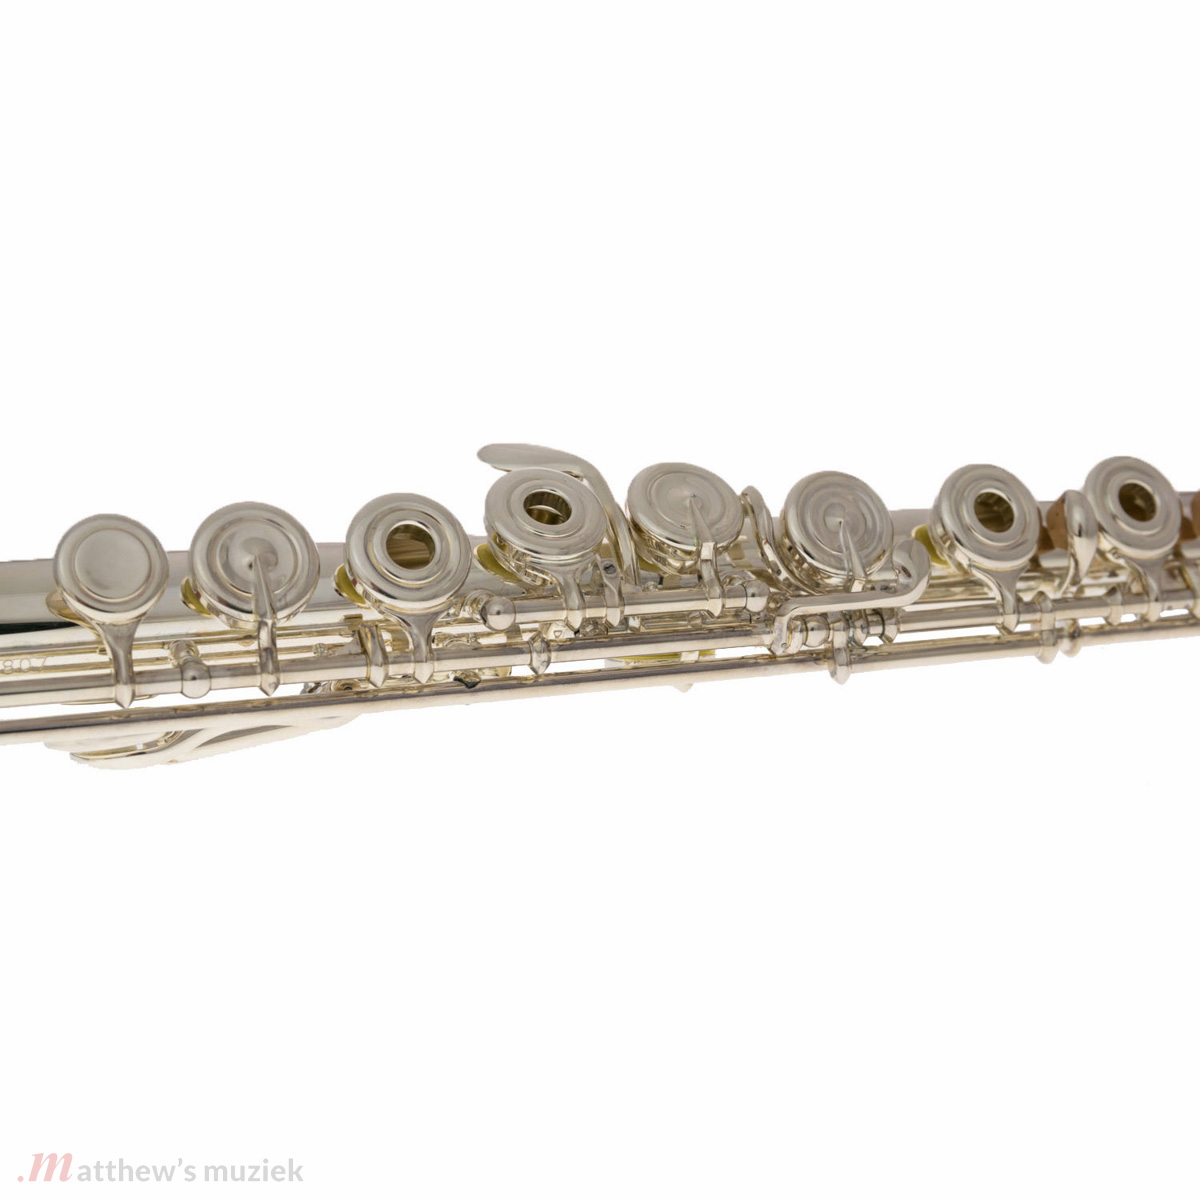 Altus Flute - 907 BE